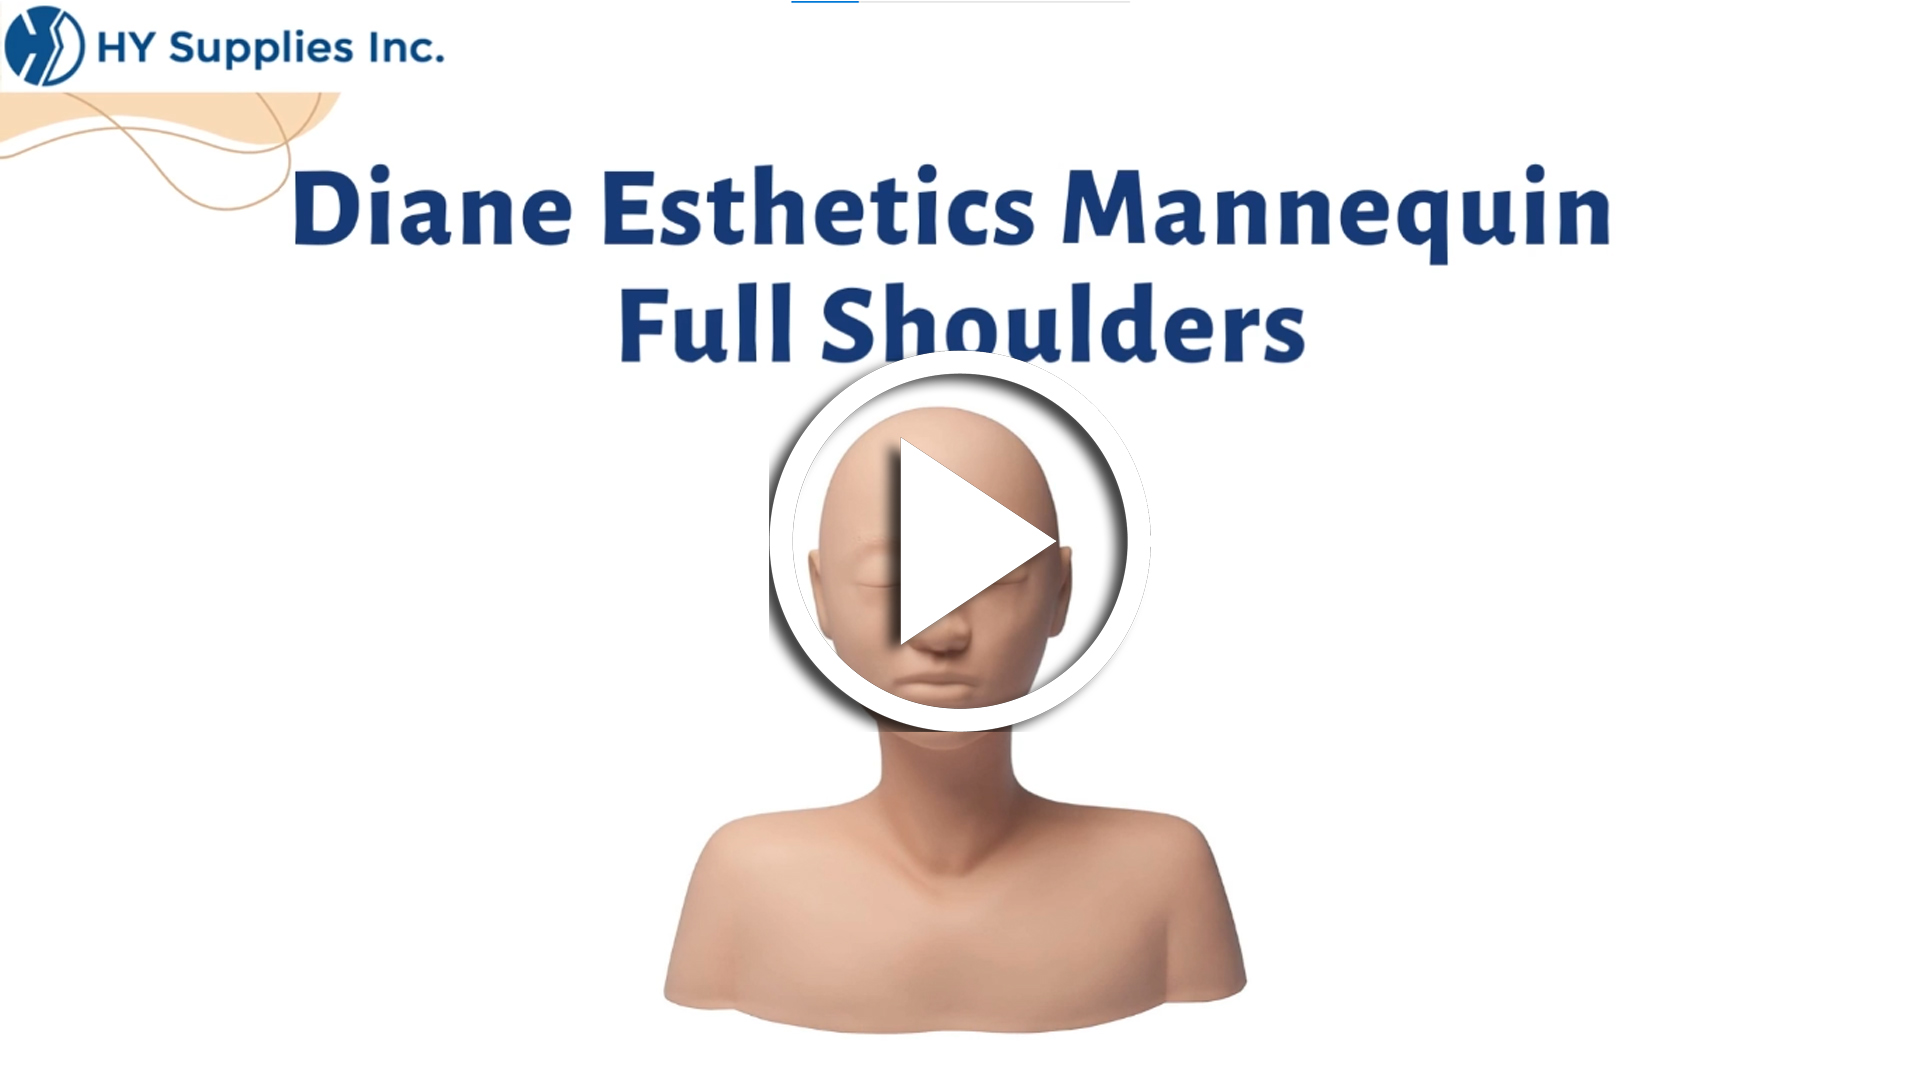 Diane Esthetics Mannequin Full Shoulders